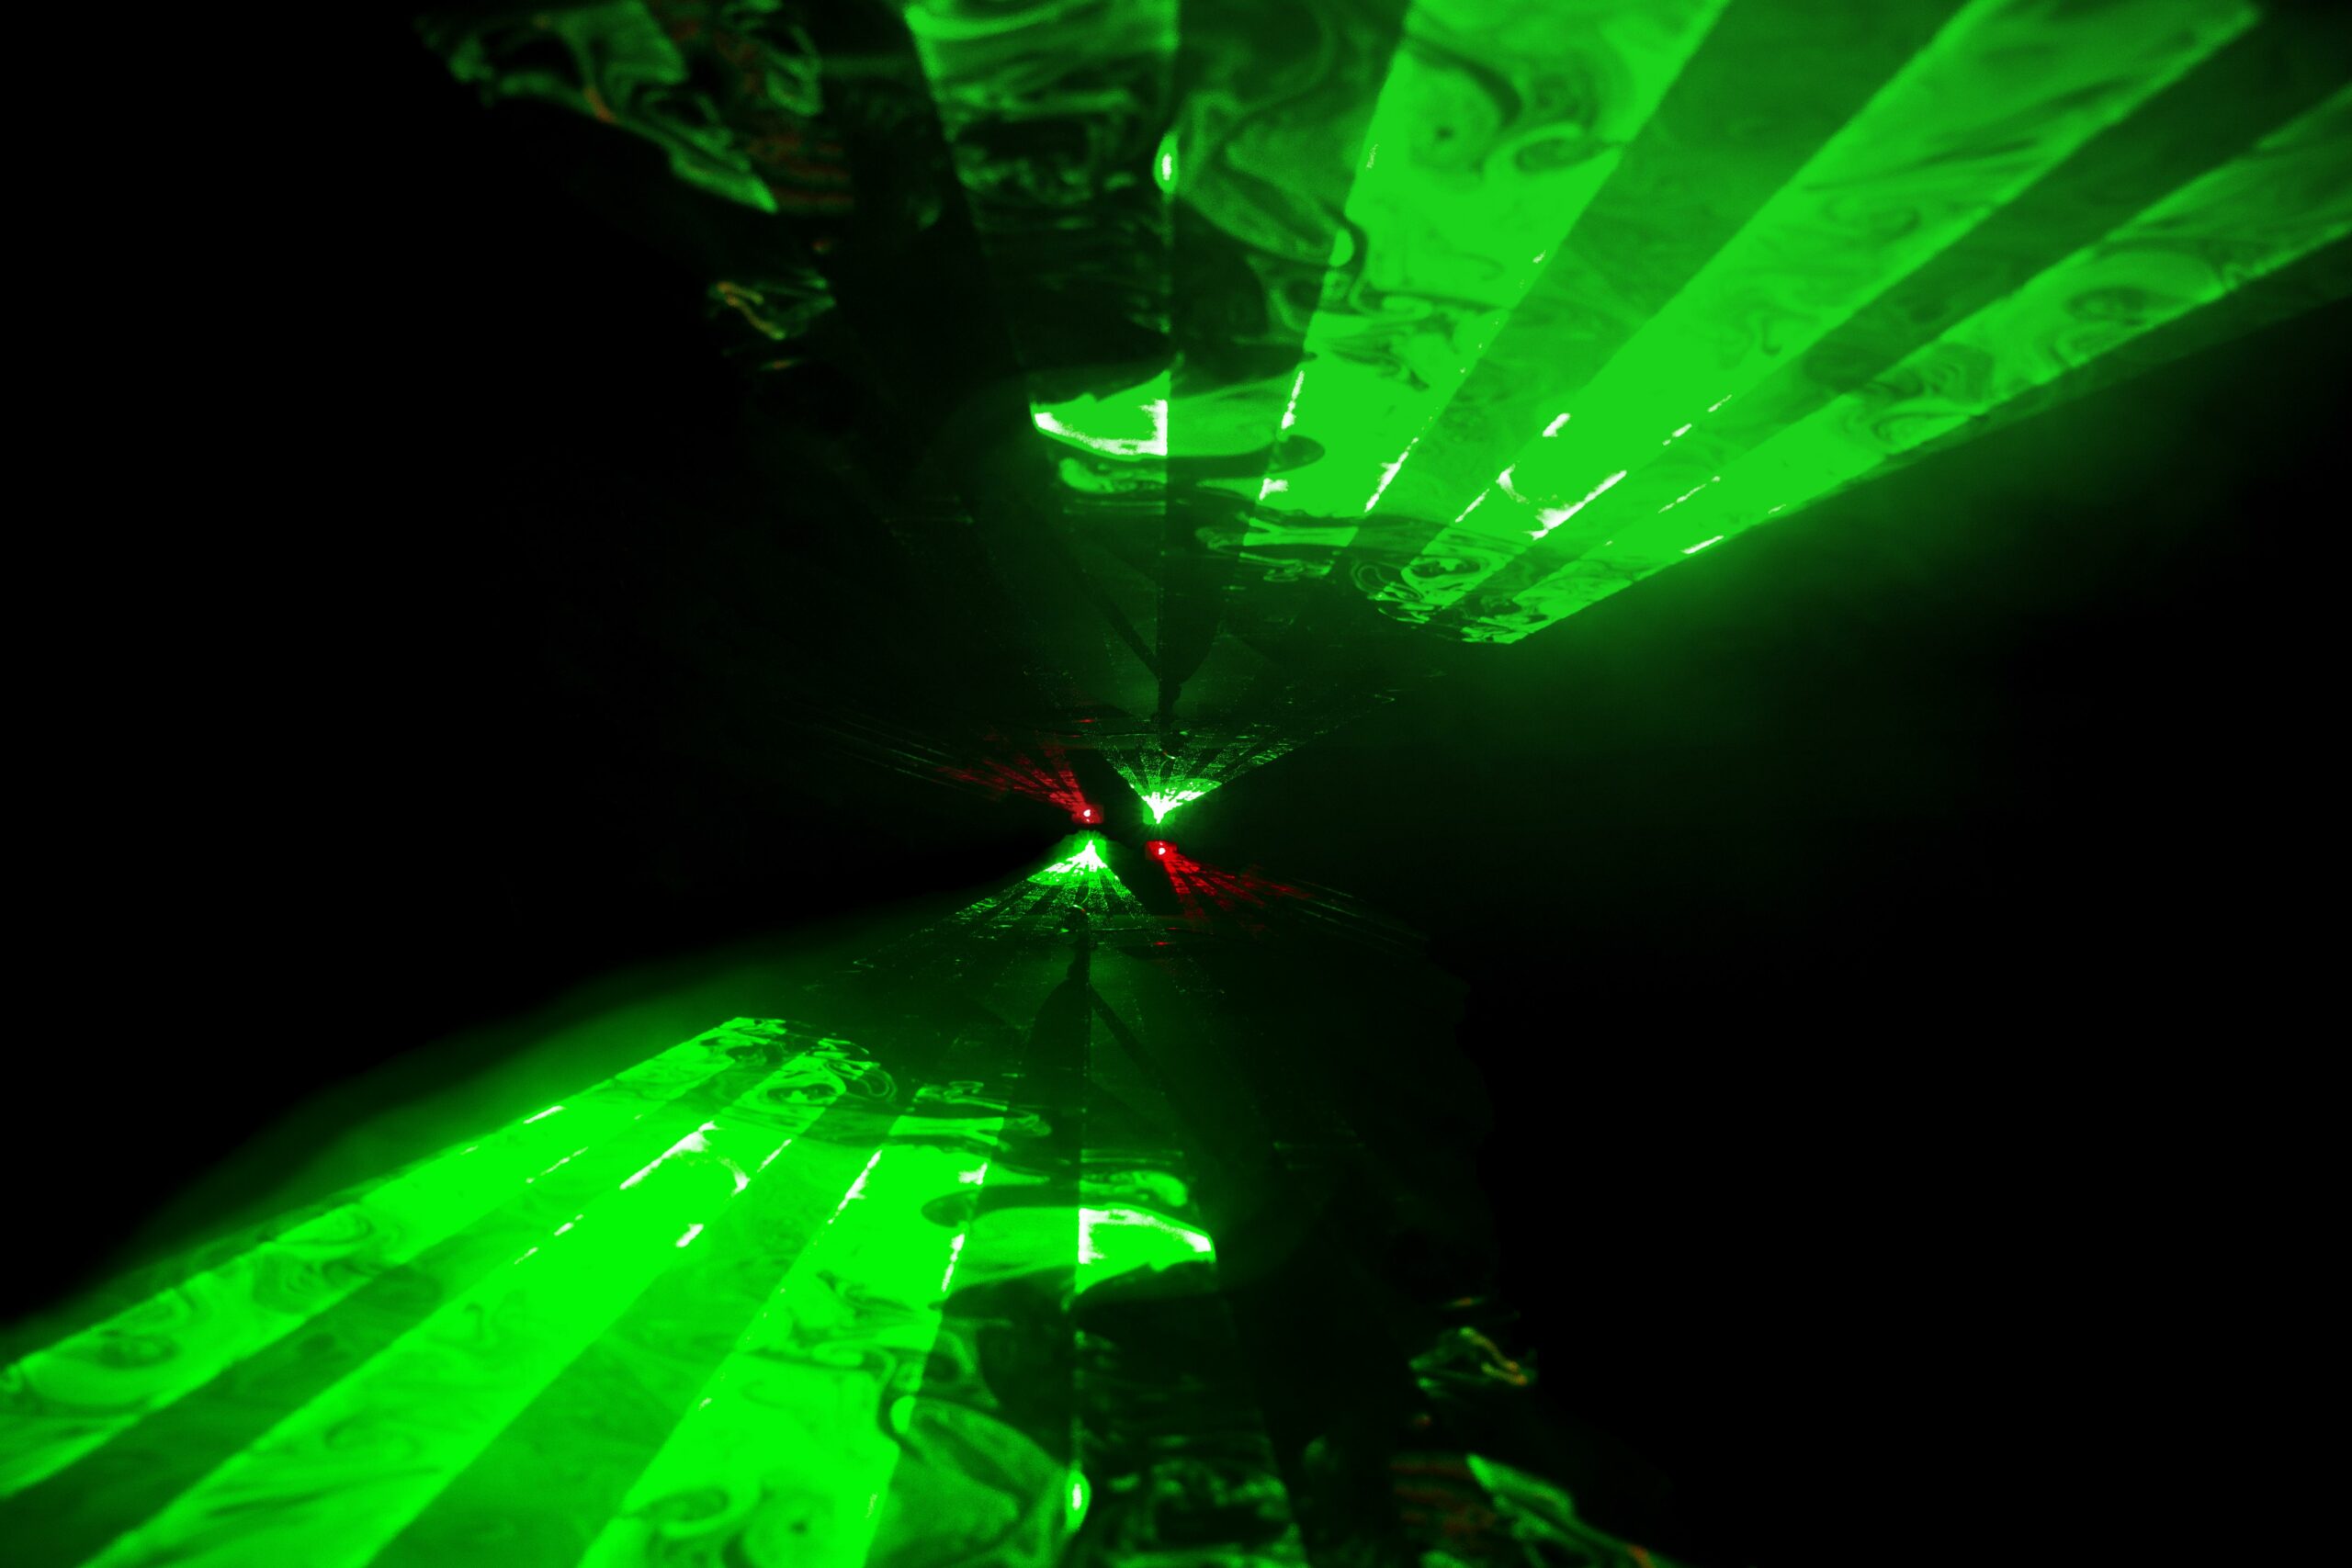 Immagini laser - Image by Freepik